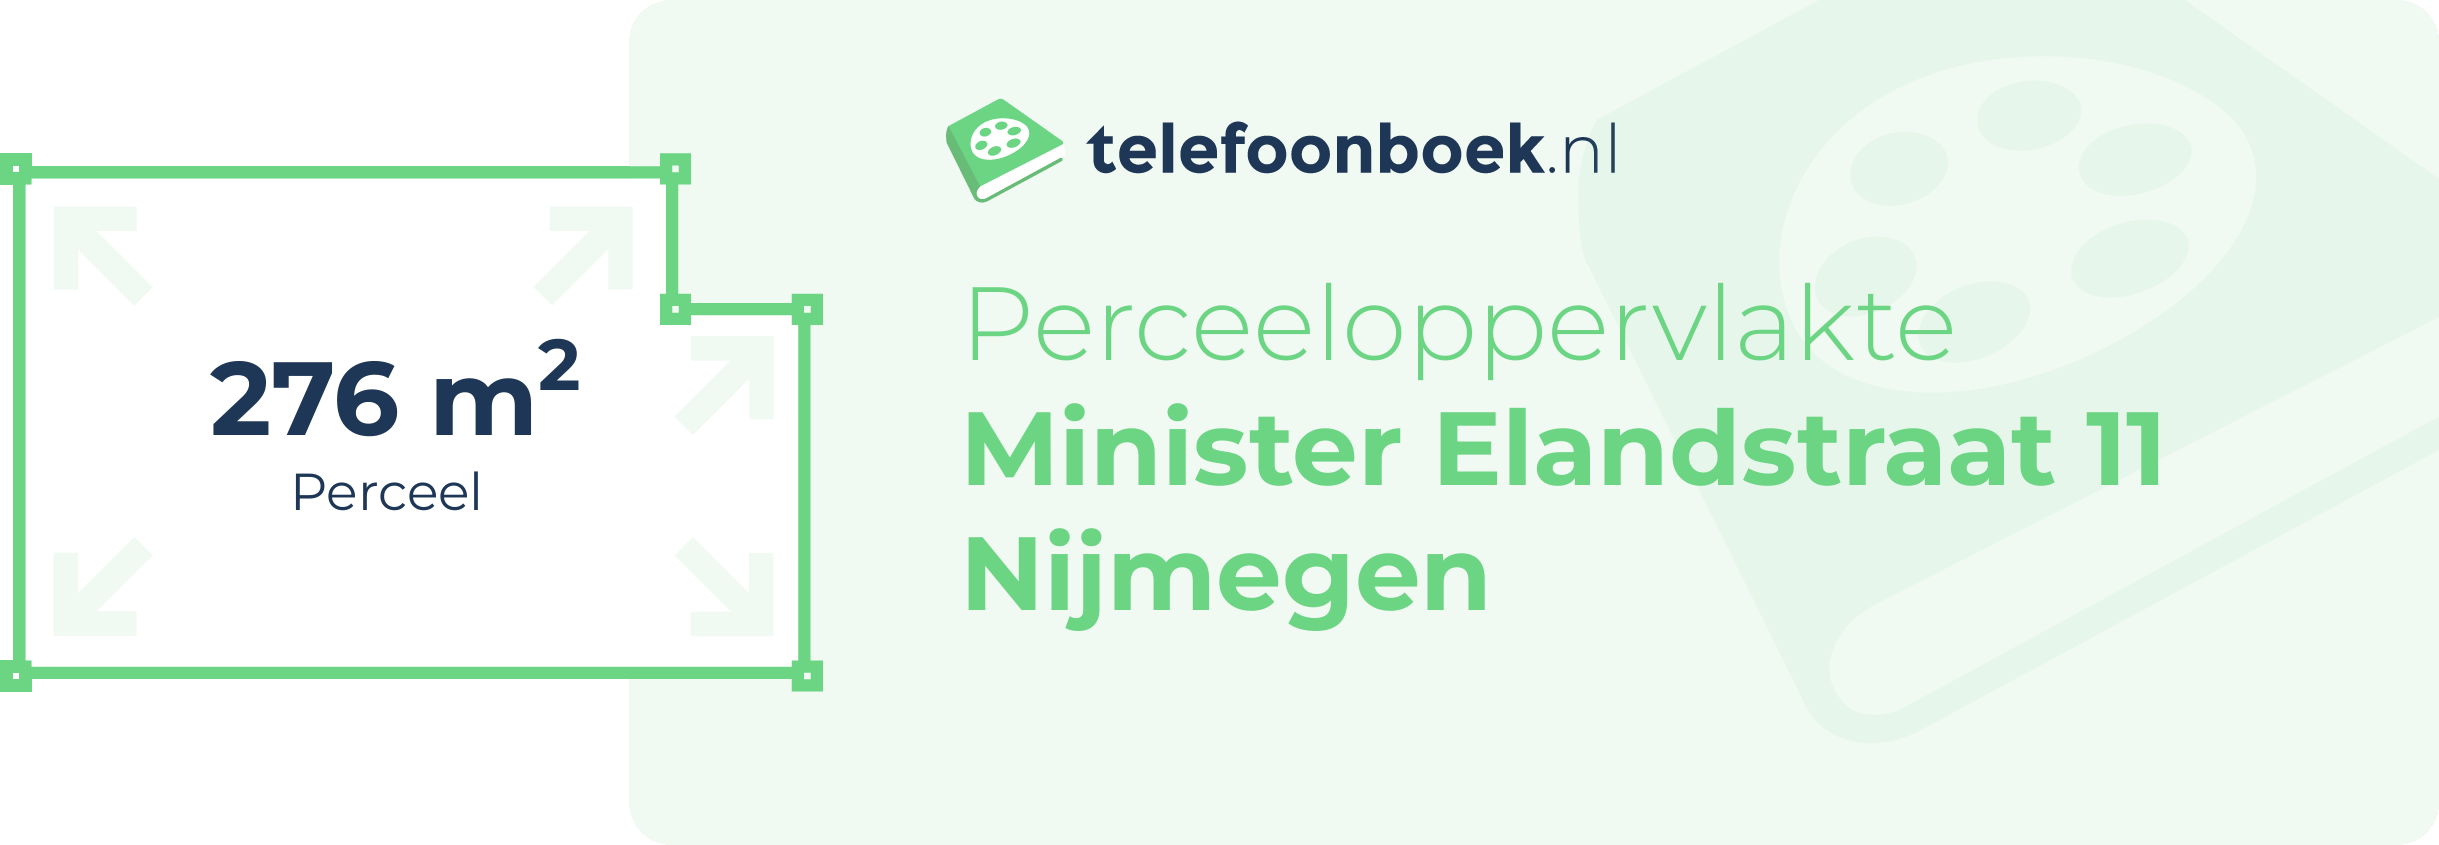 Perceeloppervlakte Minister Elandstraat 11 Nijmegen